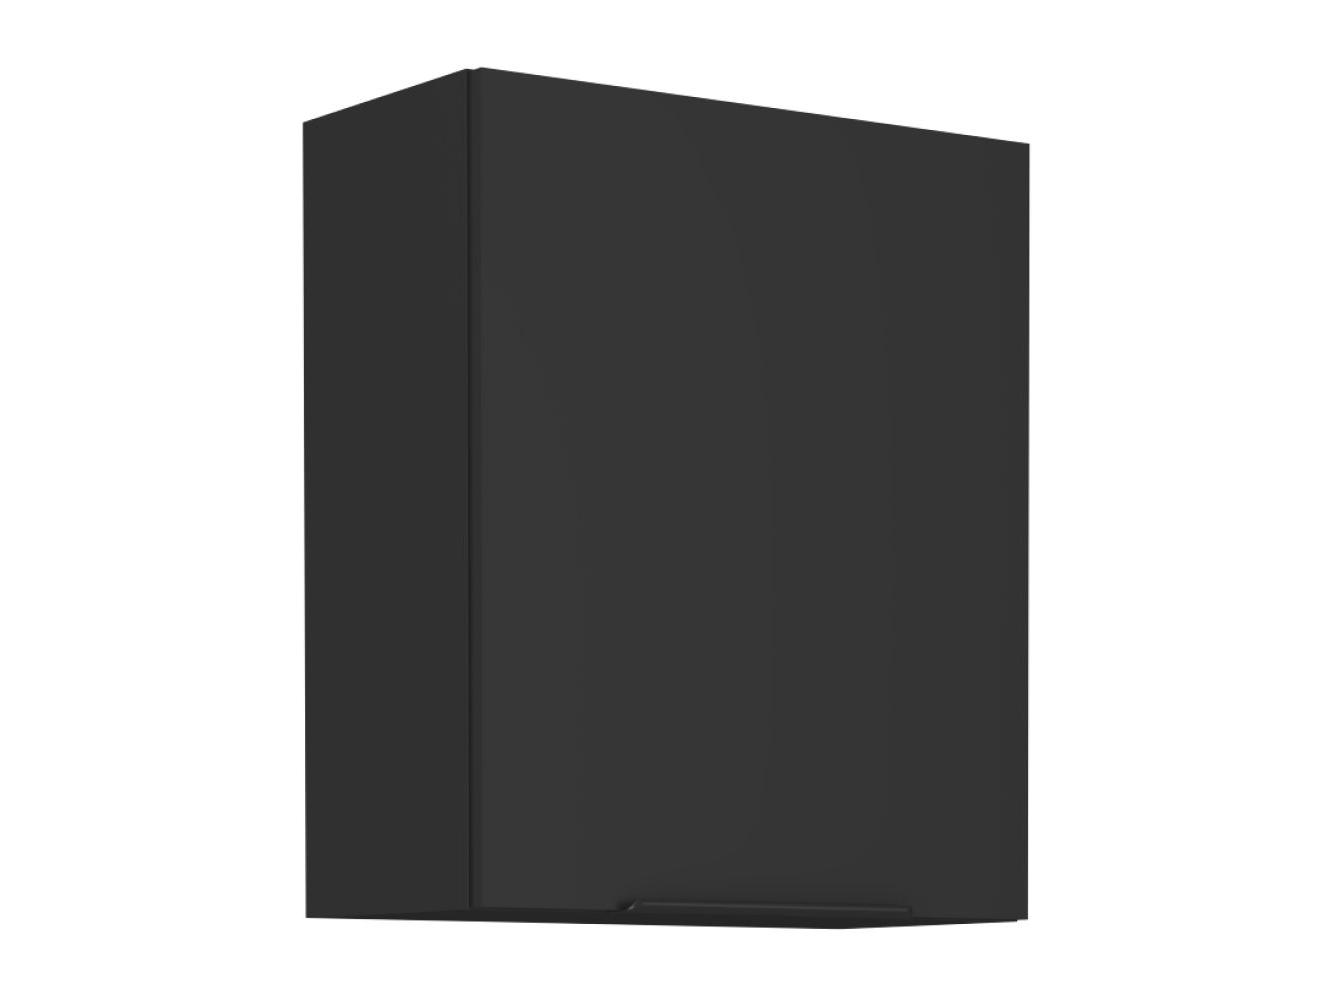 Horní kuchyňská skříňka Sobera 60 G 72 1F (černá)